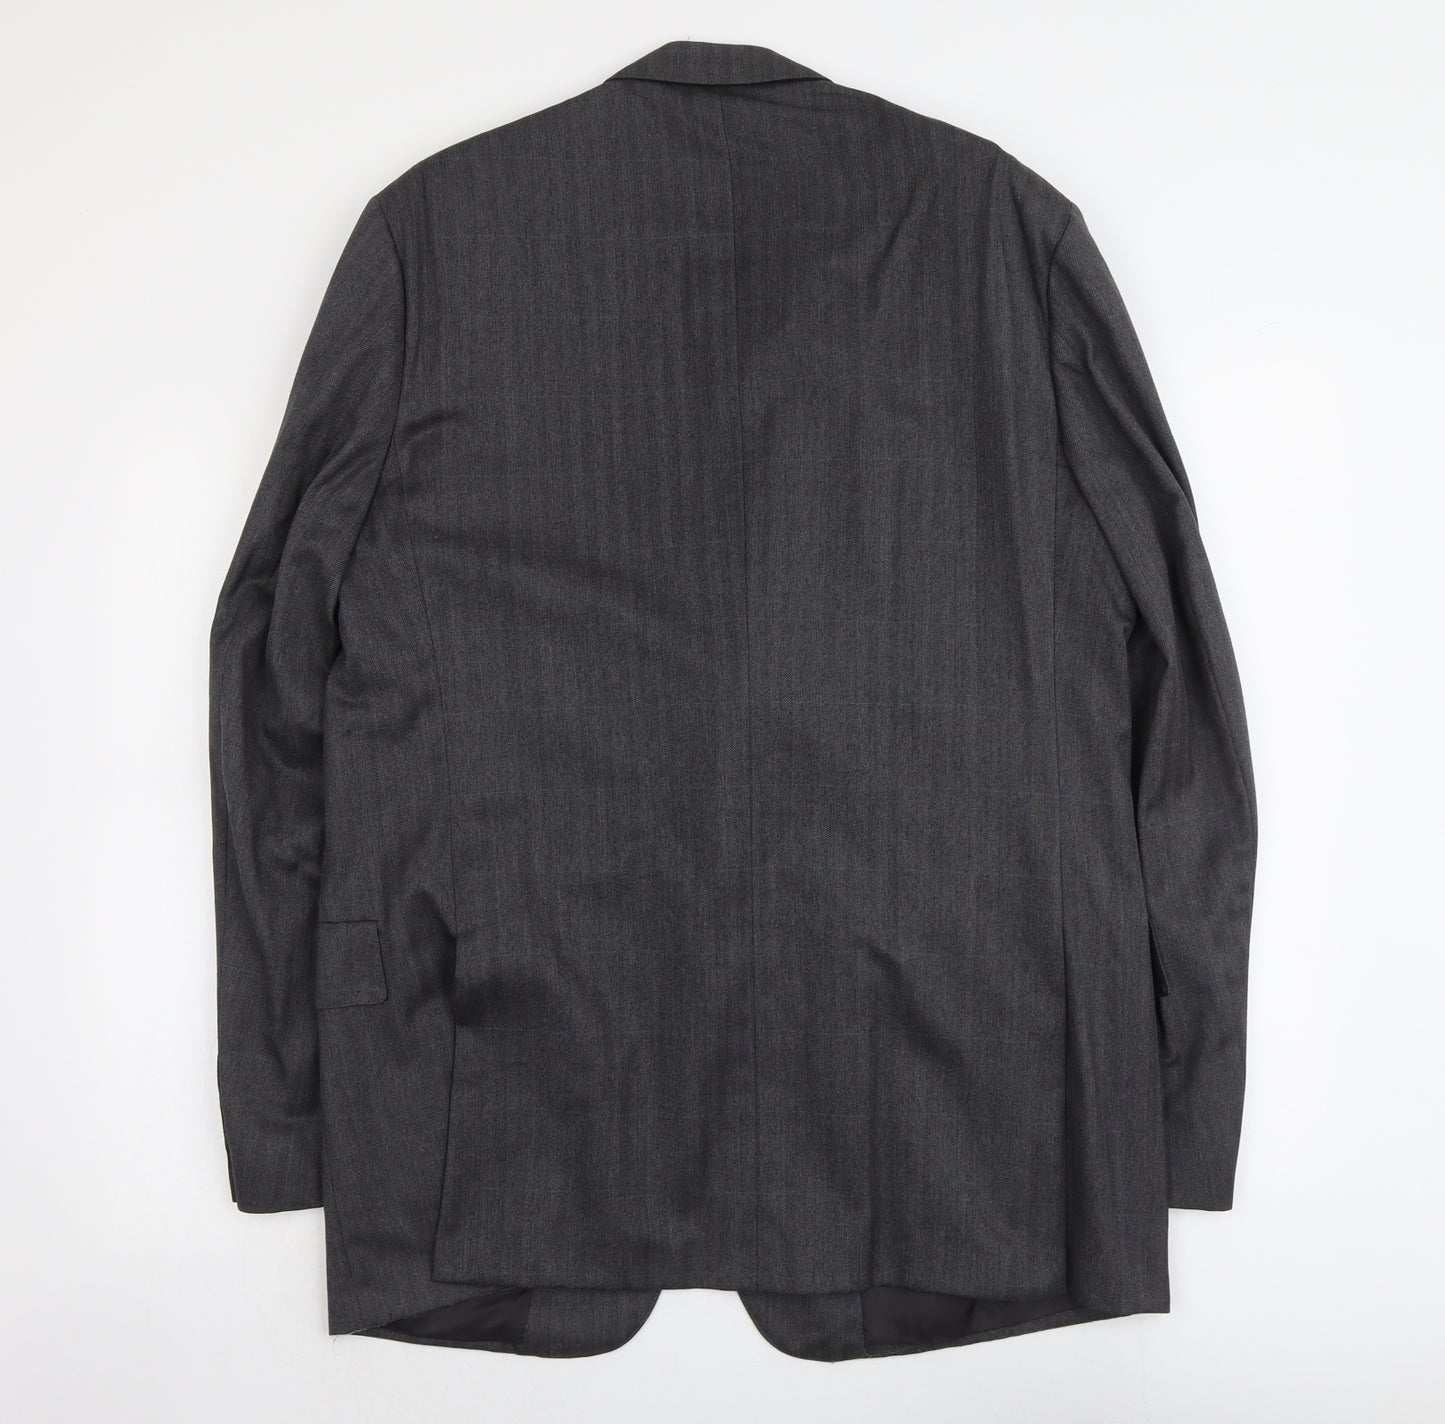 Austin Reed Mens Grey Wool Jacket Suit Jacket Size 44 Regular